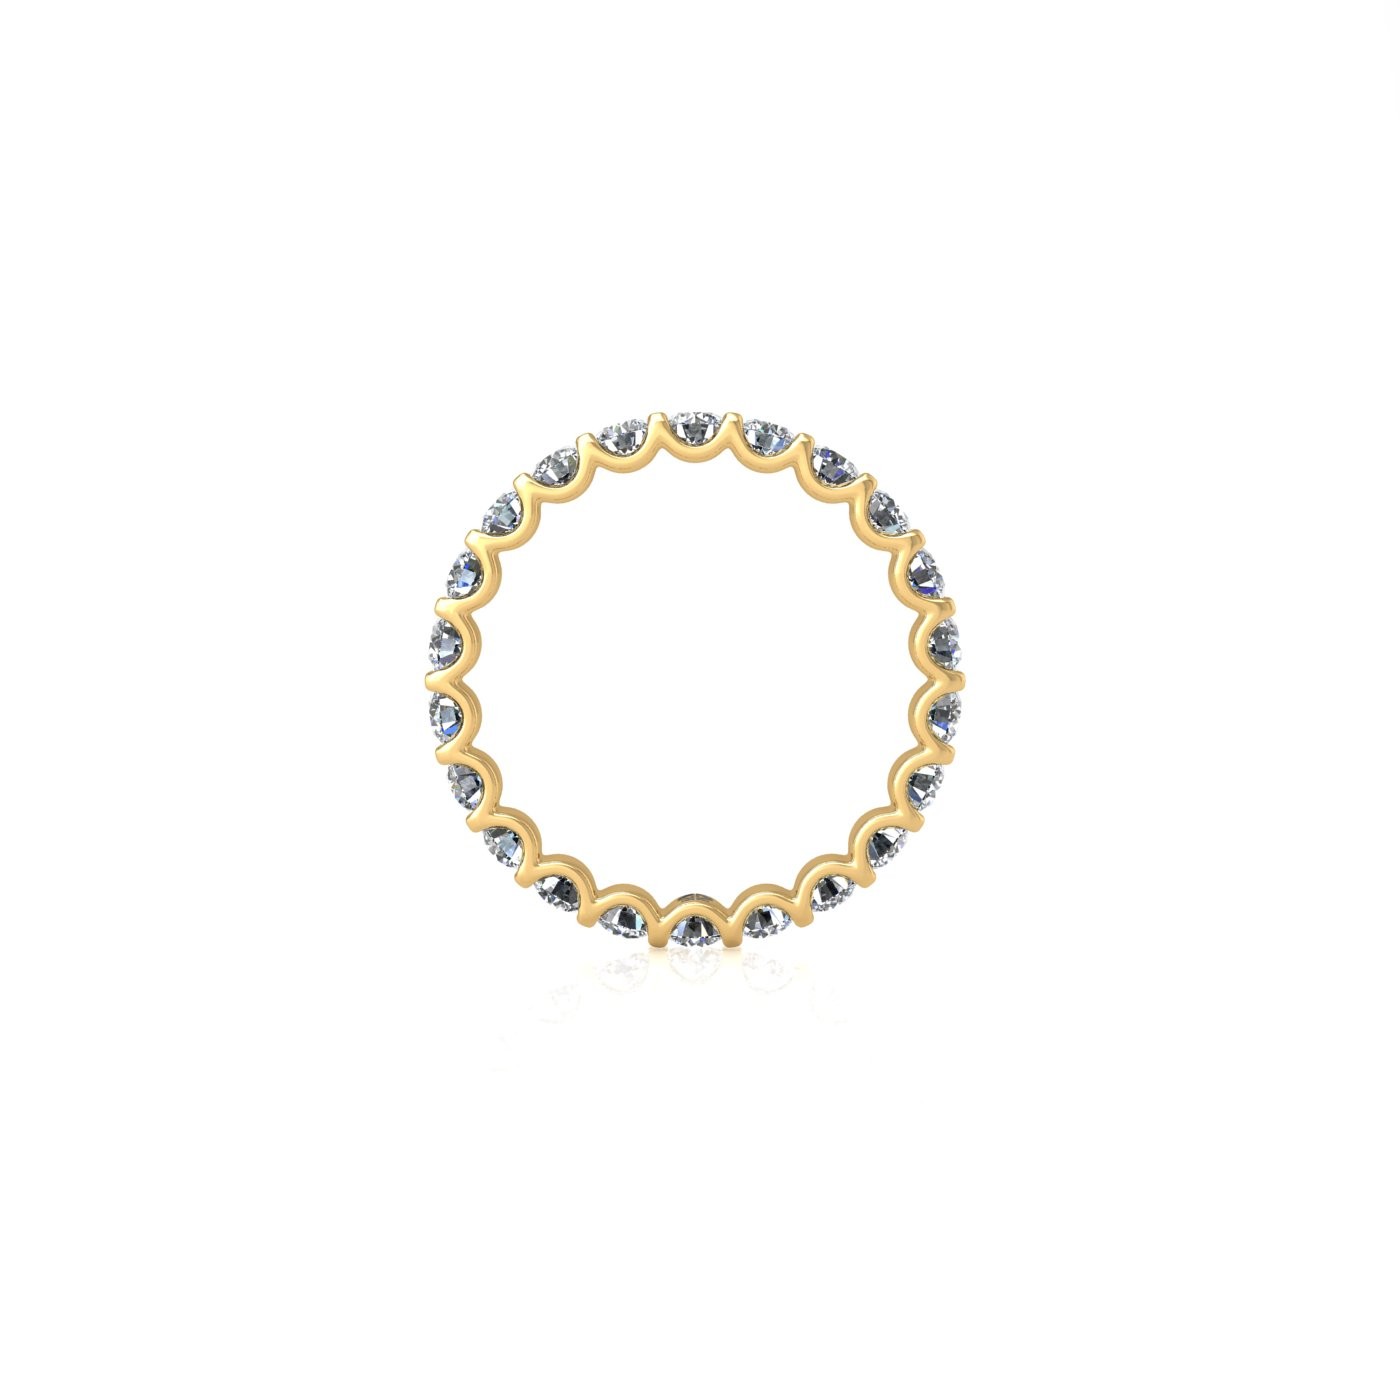 18k yellow gold  round shape diamond full eternity ring in u-prong setting